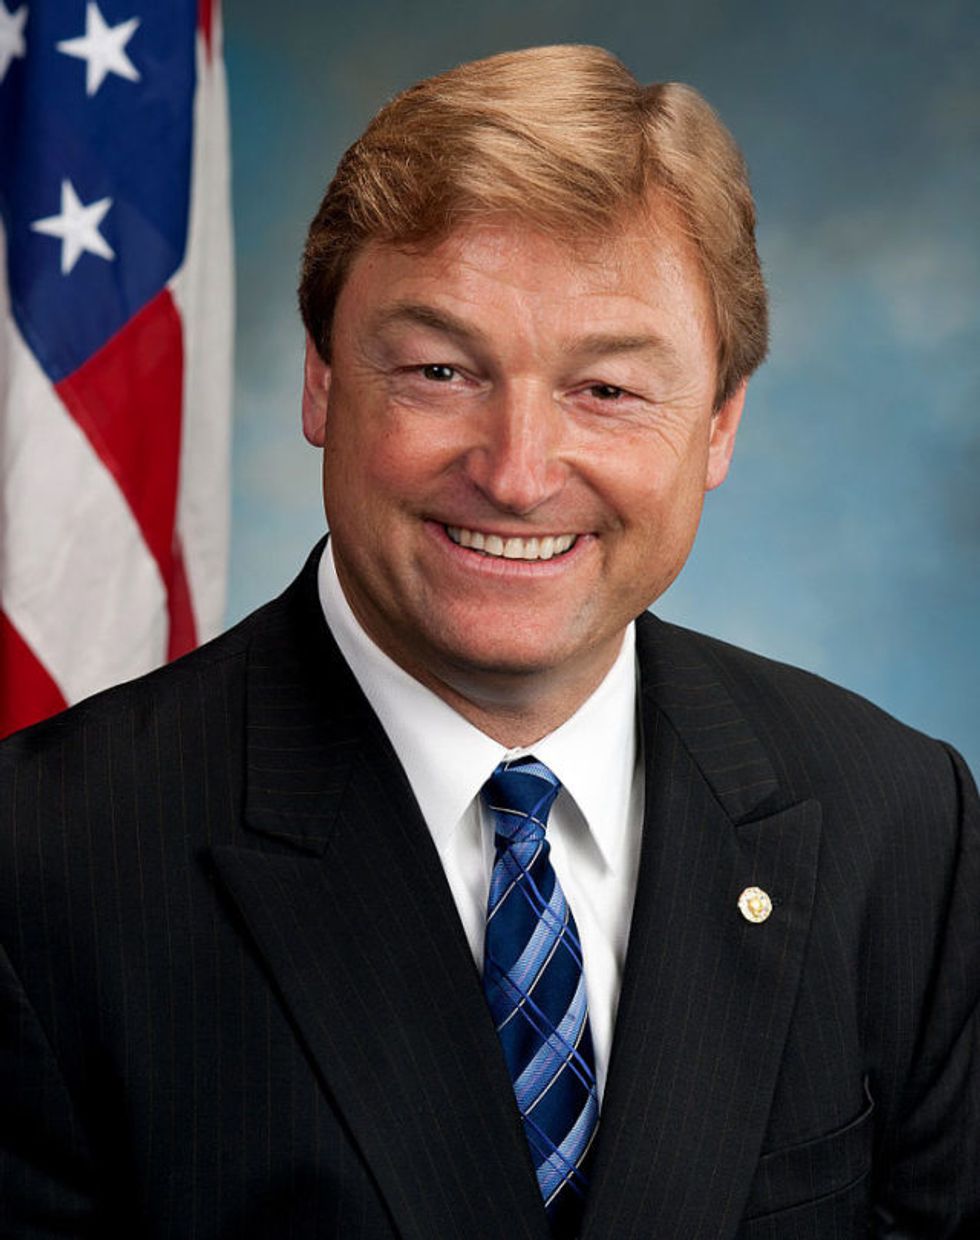 Senator Heller Pushed Unproven ‘Brainwave’ Treatment Of Veterans